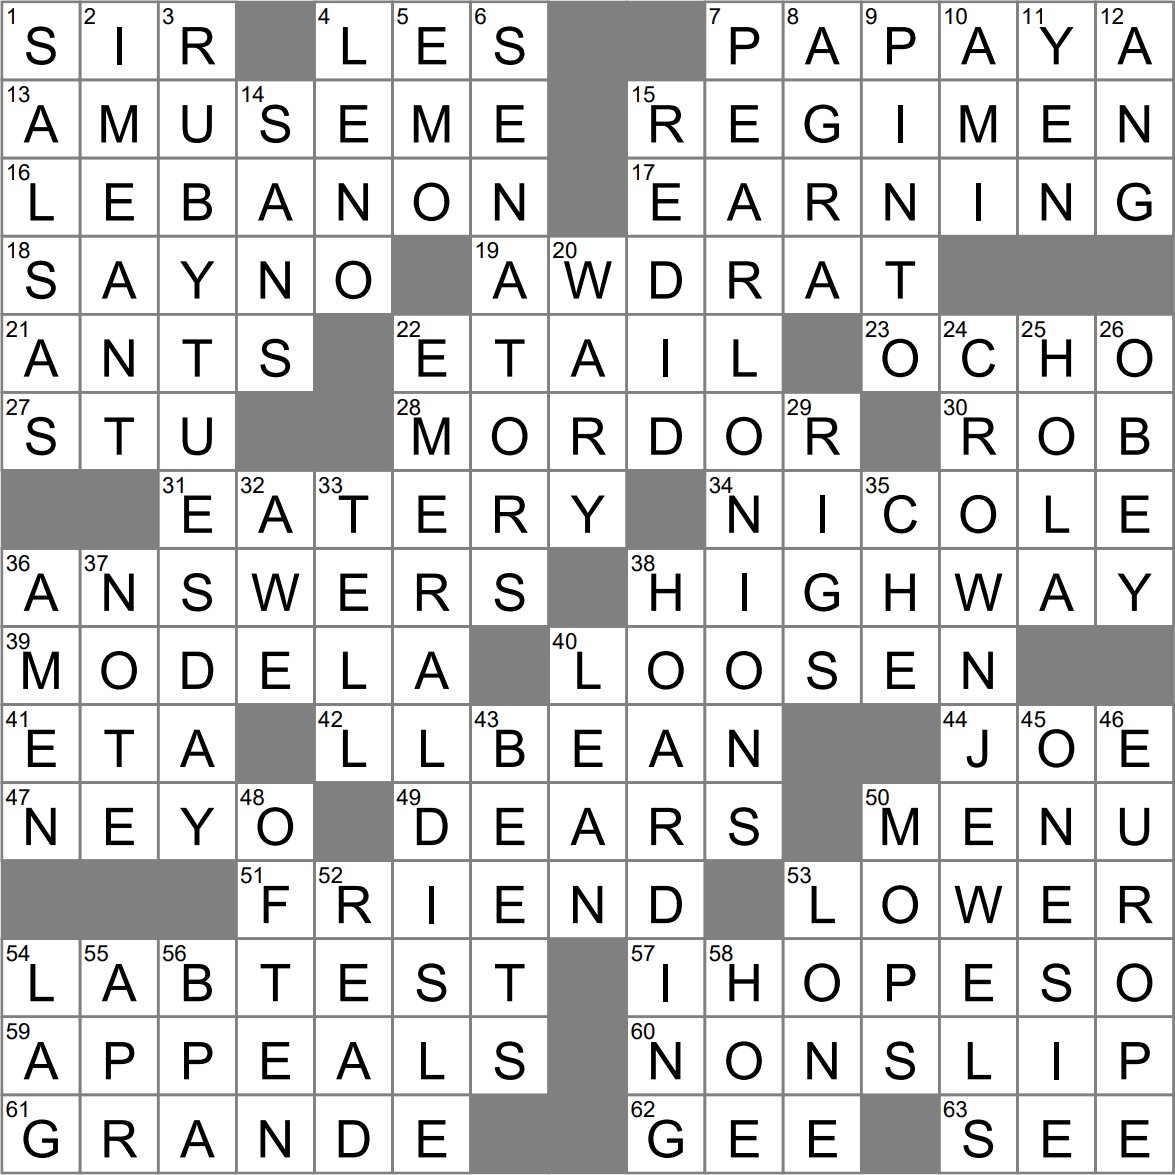 LA Times Crossword 8 May 23 Monday LAXCrossword com